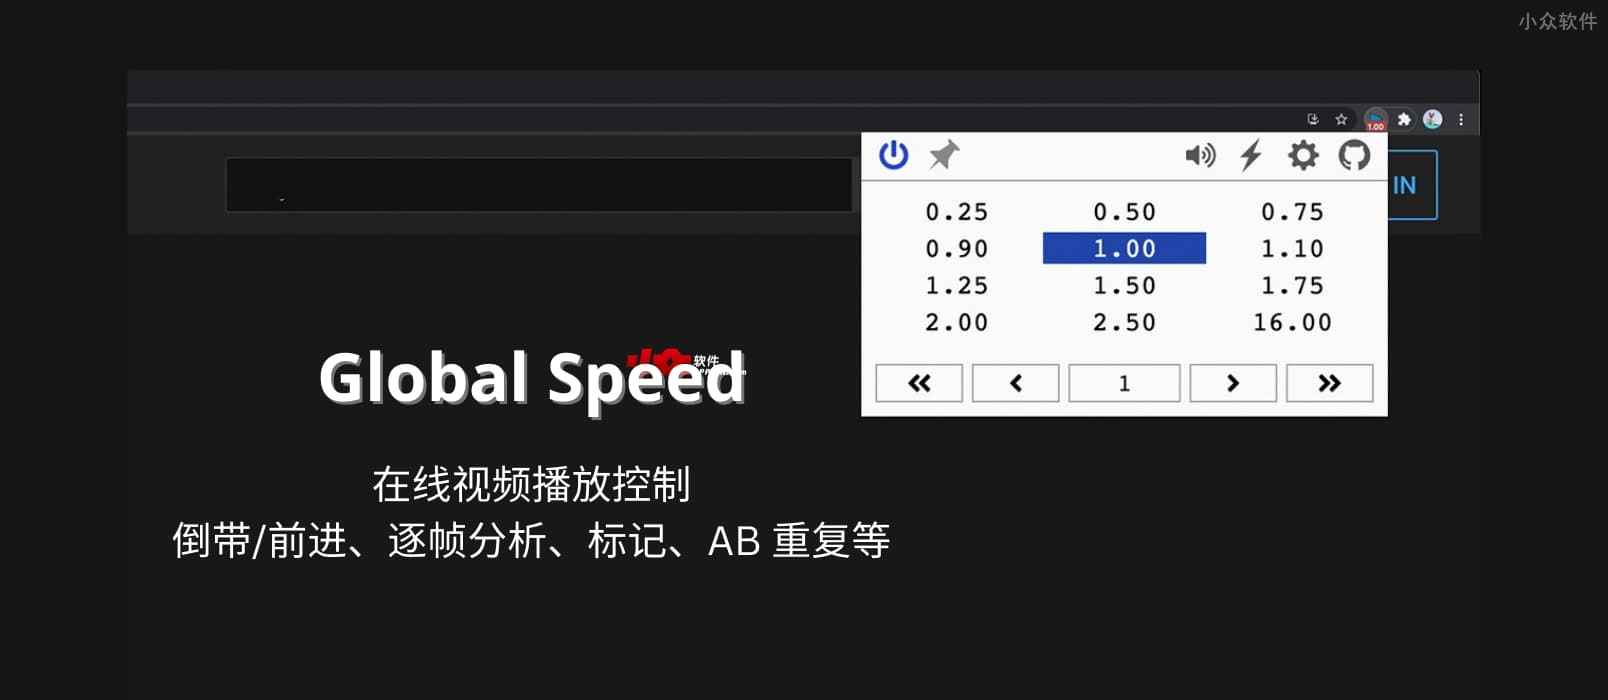 Global Speed - 在线视频播放控制：倍速、倒带/前进、逐帧分析、标记、AB 重复等[Chrome/Firefox]